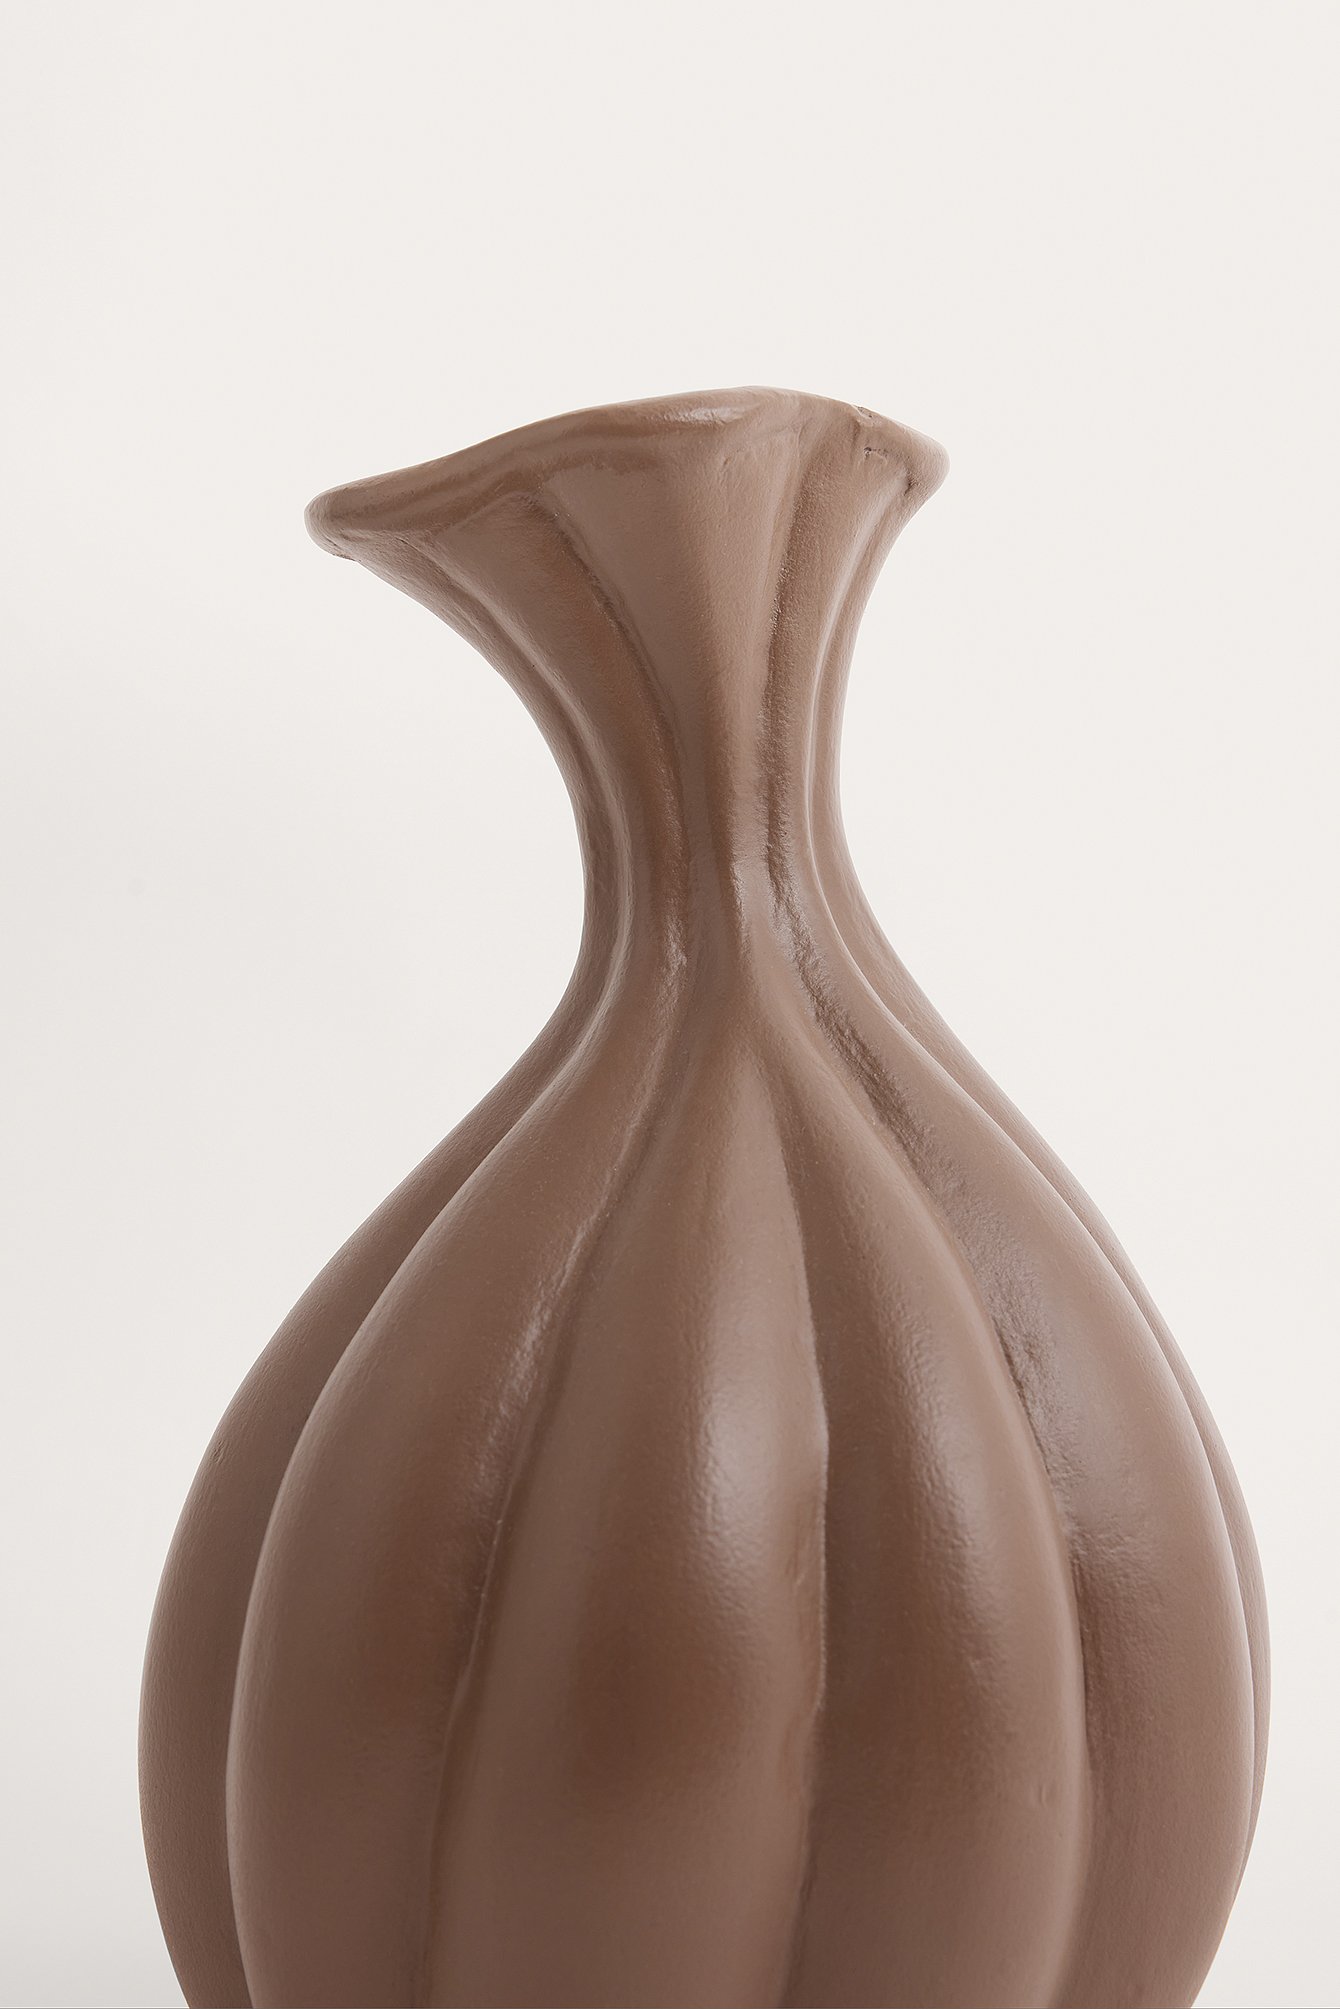 Brown Eco Vase Groß